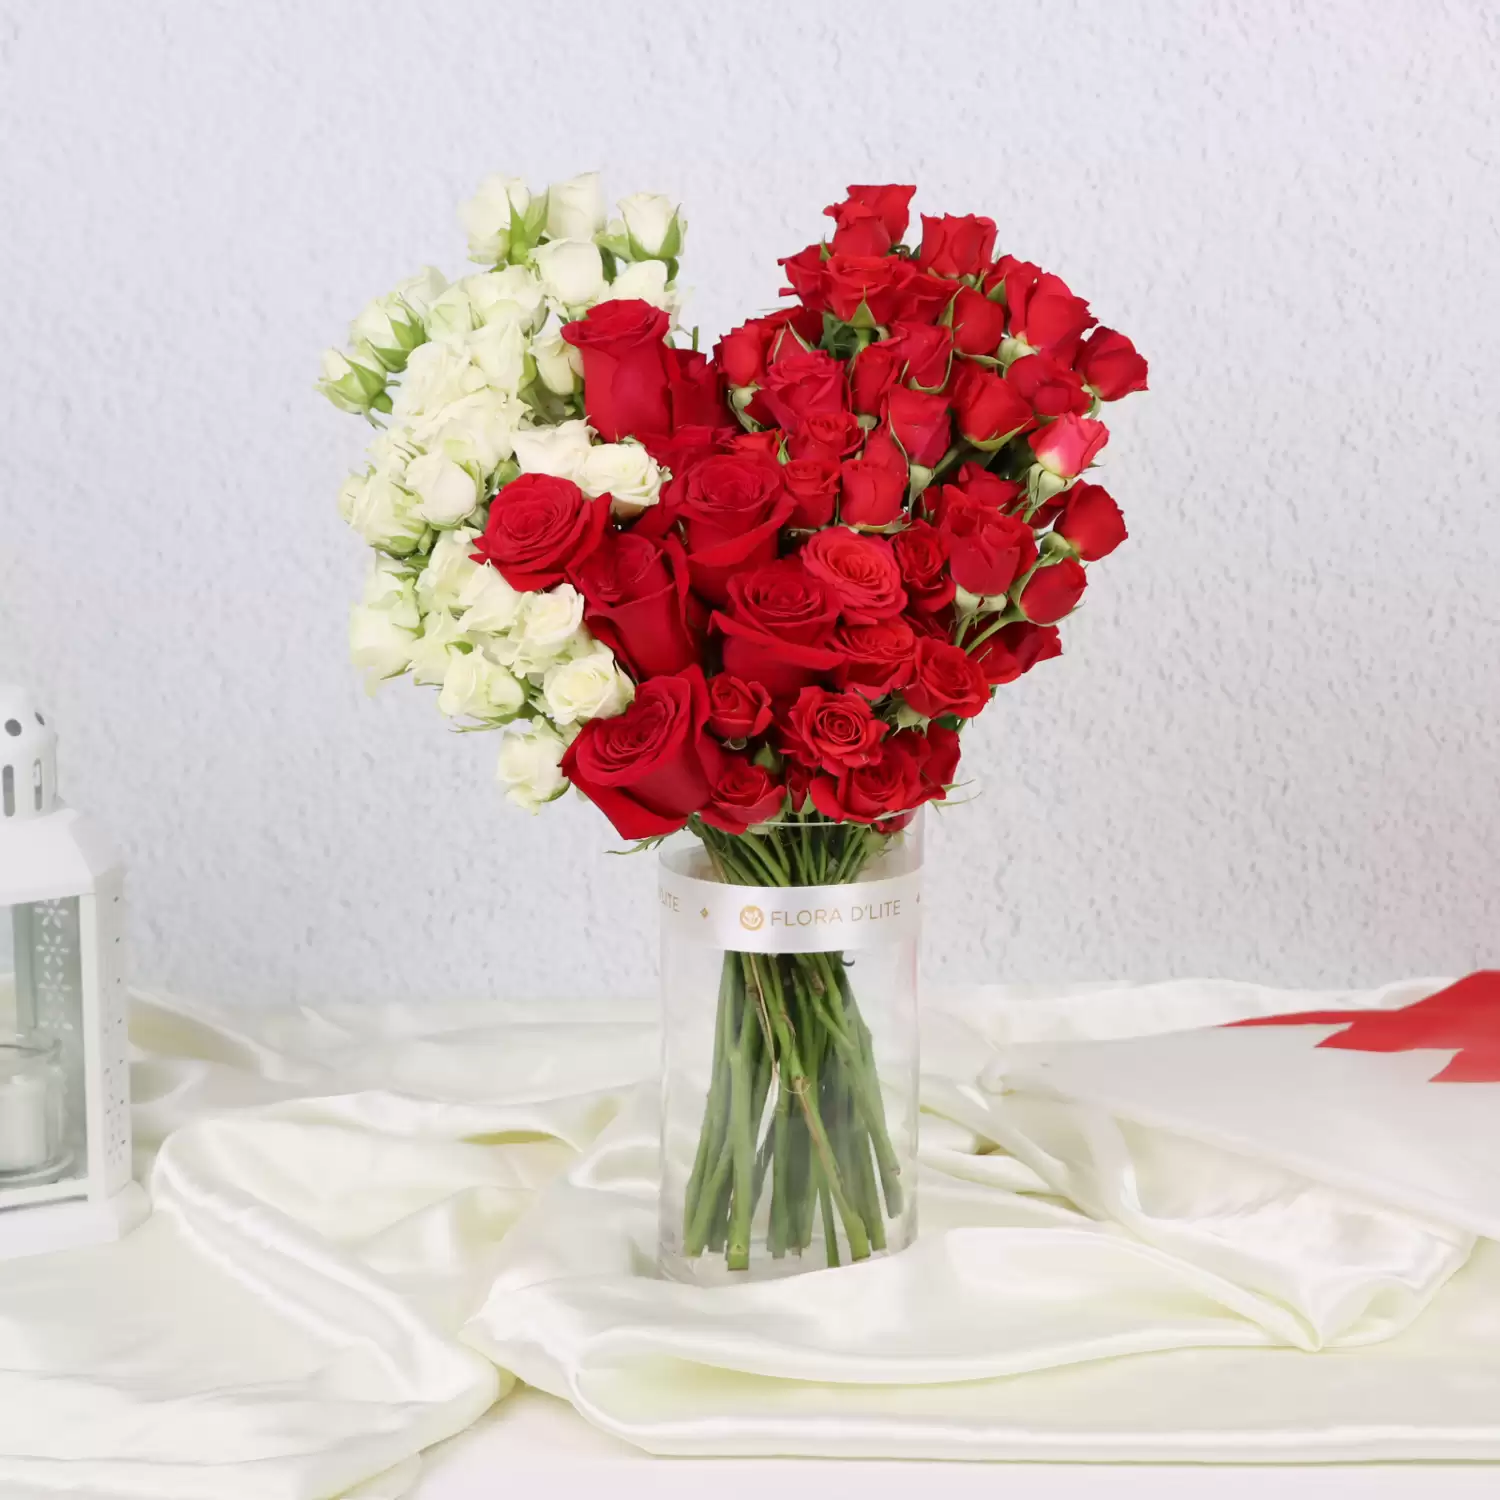 Celebrate National Day In Bahrain | Bahrain National Day | Gift Flowers In Bahrain - Flora D'lite